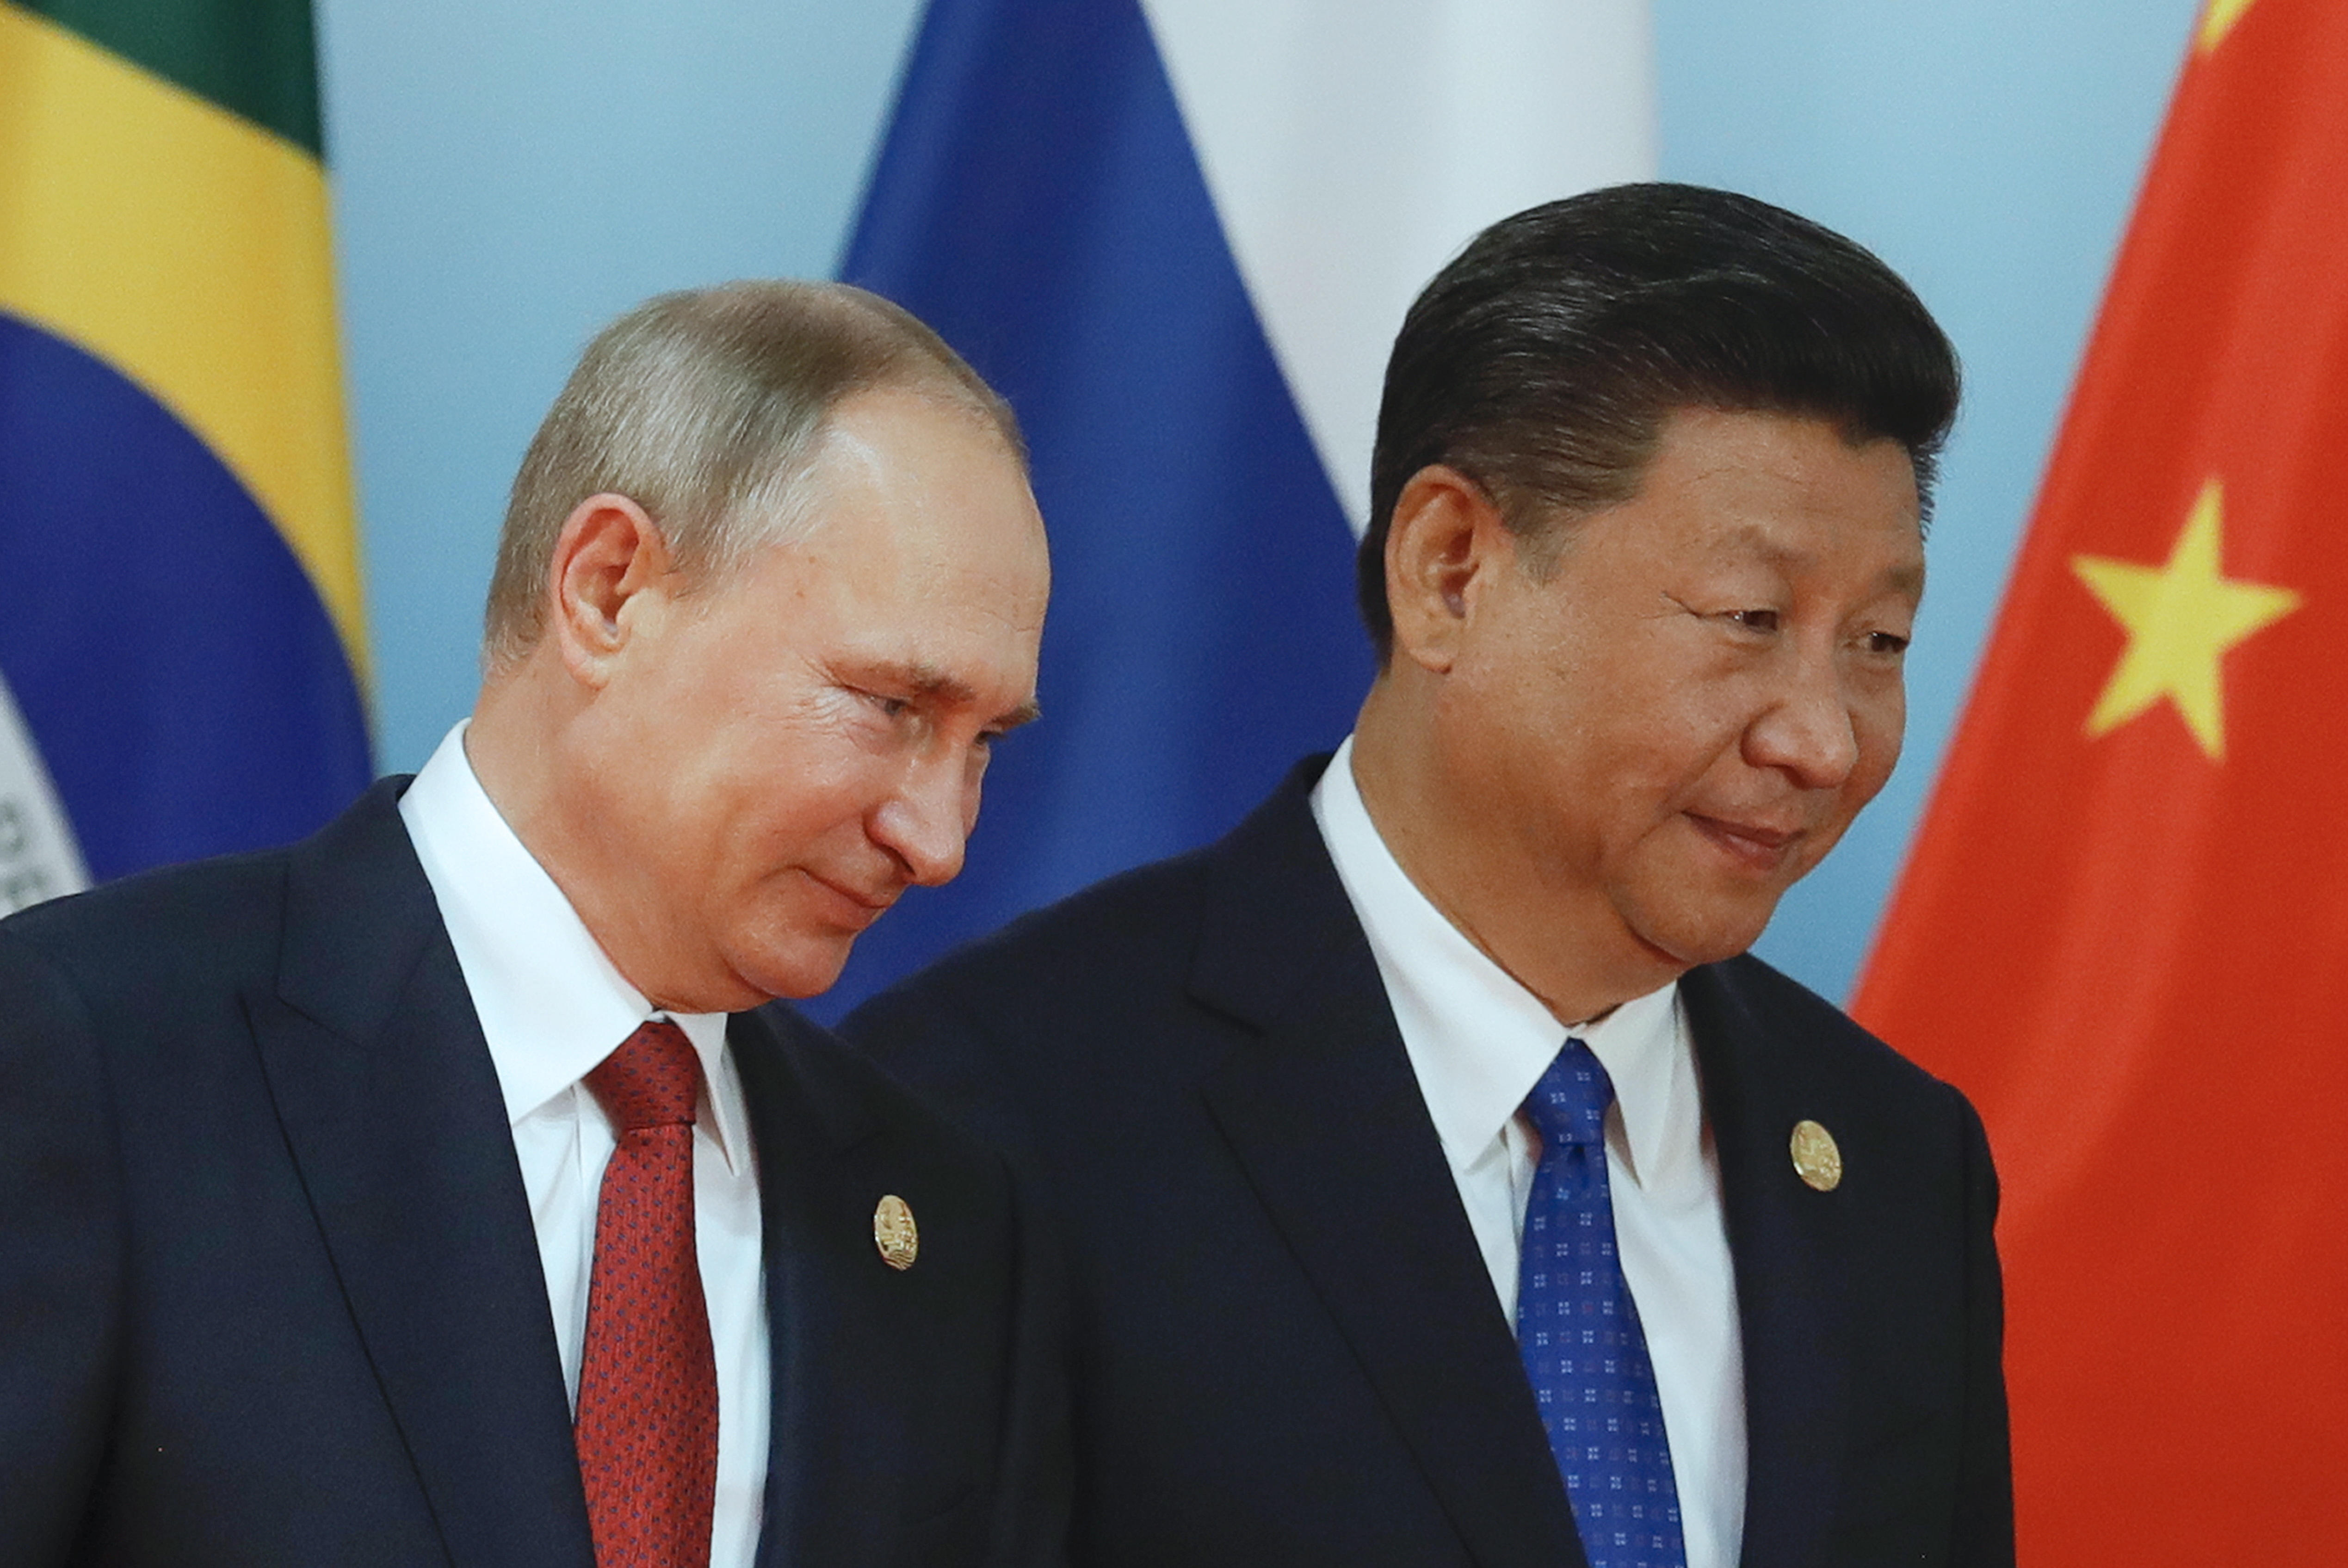 נשיא רוסיה פוטין ונשיא סין שי ג'ינפינג. מלחמת הסייבר תגבר (צילום: MCT) (צילום: MCT) (צילום: MCT)